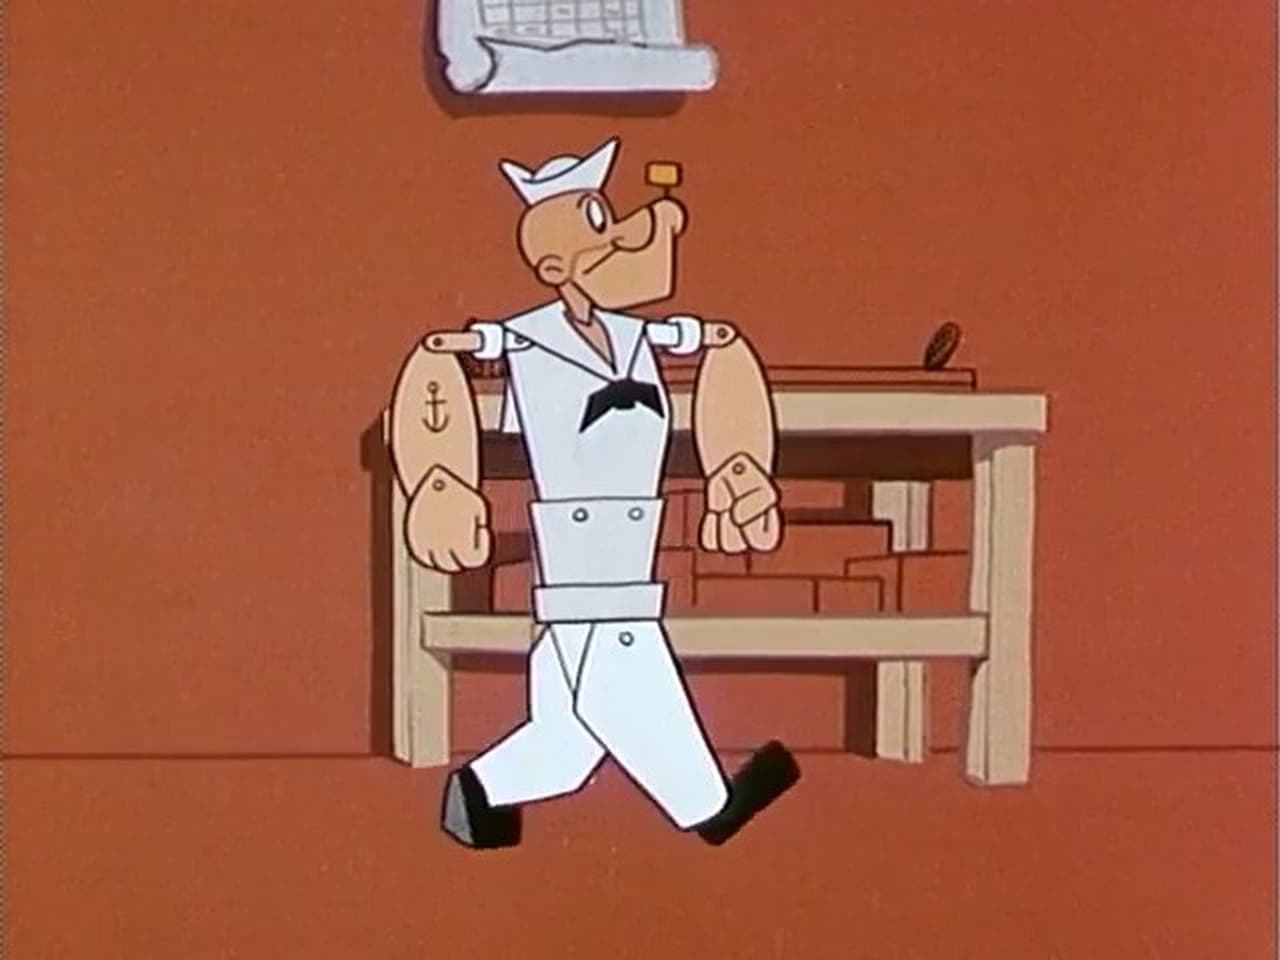 Popeye the Sailor - Season 2 Episode 34 : Robot Popeye